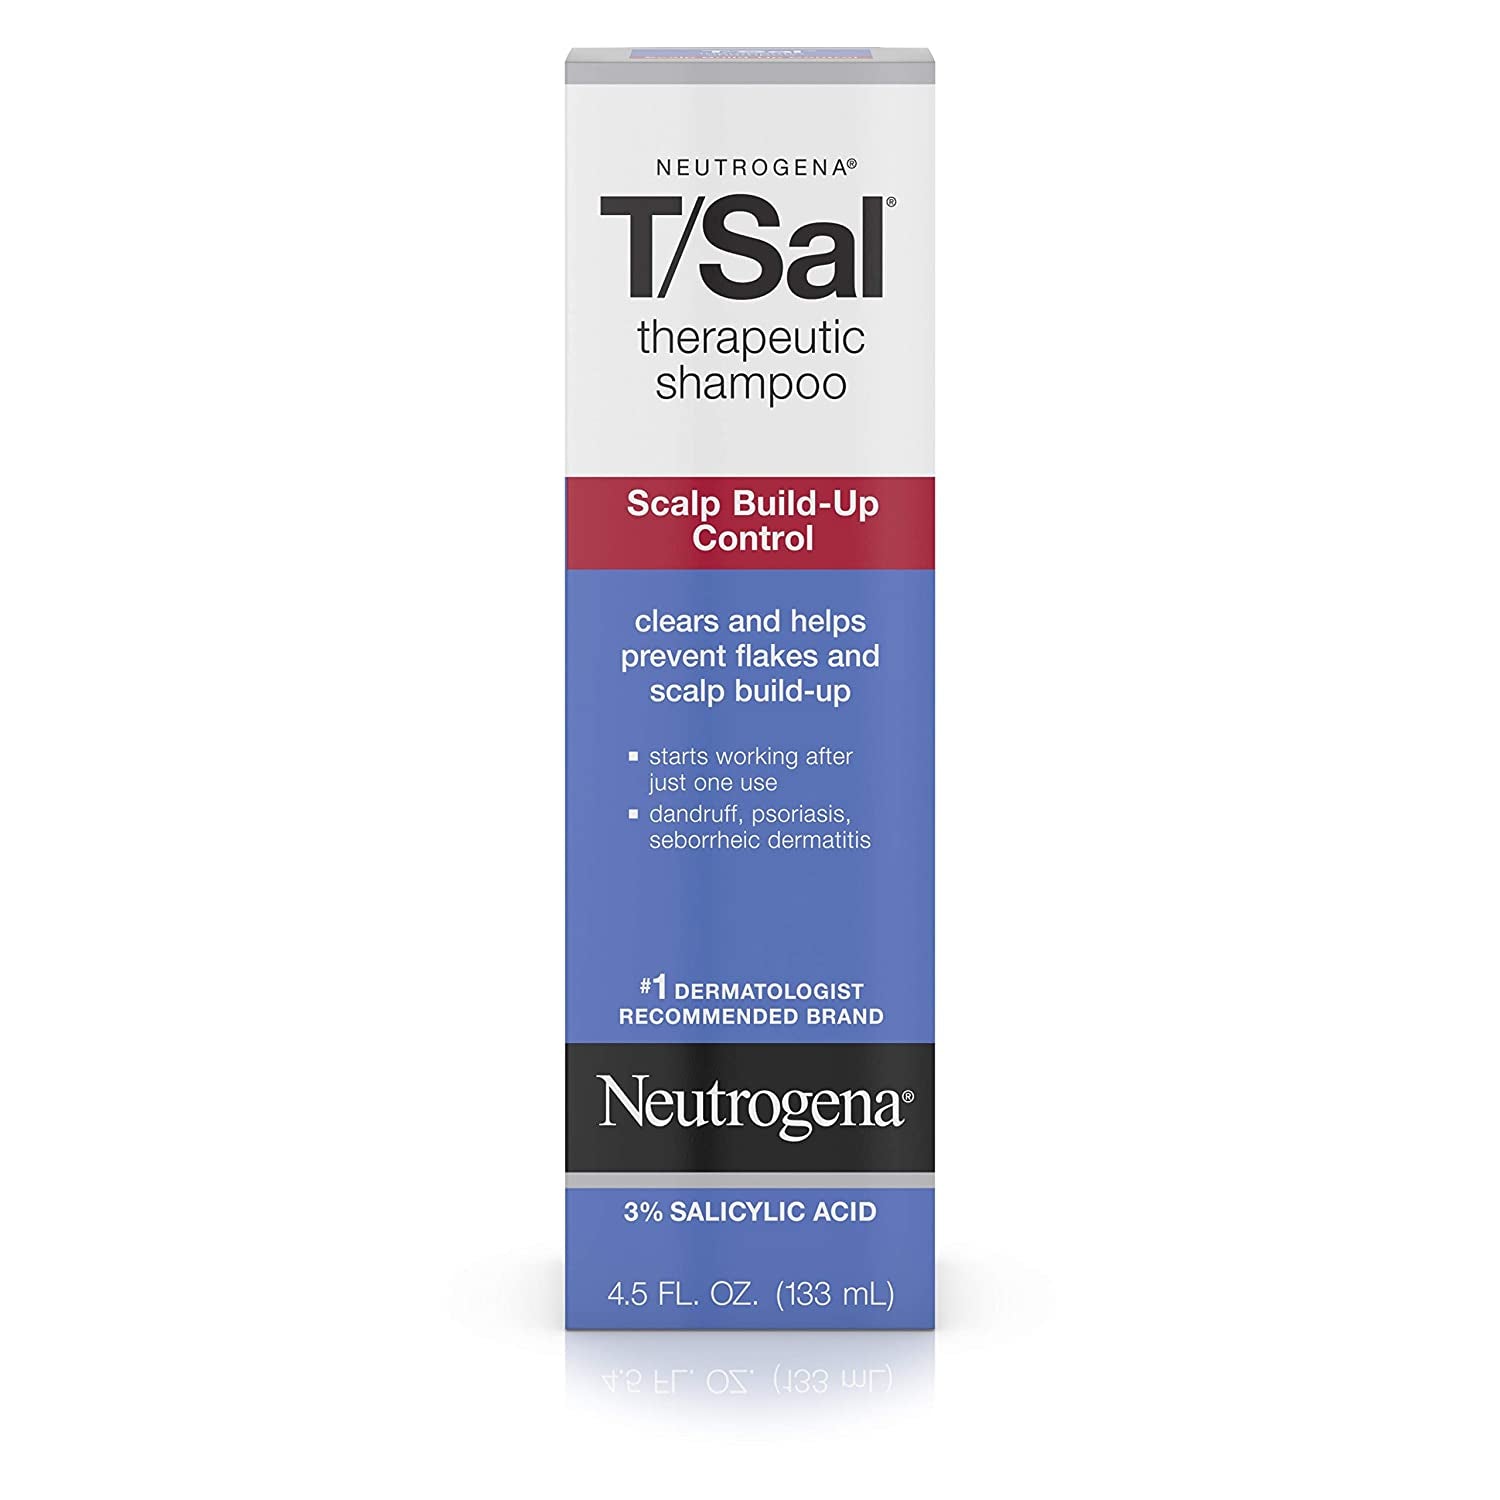 Neutrogena T/SAL Therapeutic Shampoo for Scalp Build-Up Control with Salicylic Acid, Scalp Treatment for Dandruff, Scalp Psoriasis & Seborrheic Dermatitis Relief, 4.5 Fl. Oz